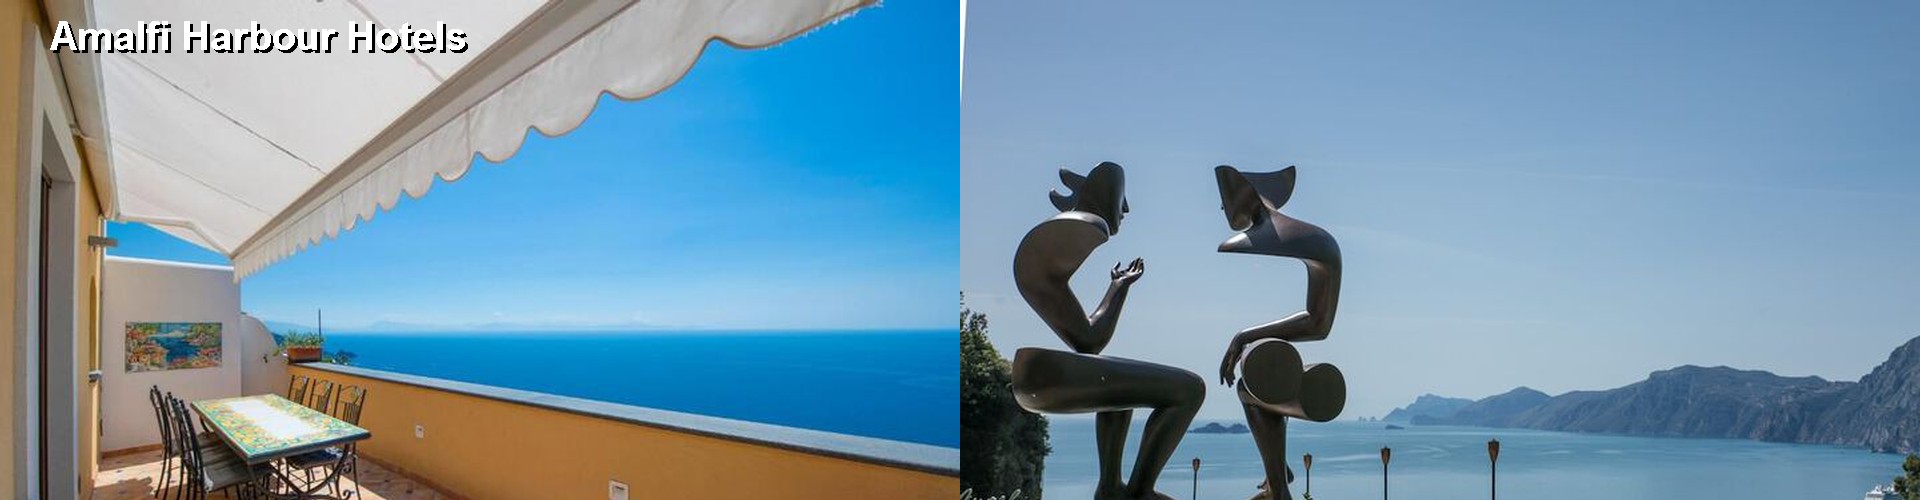 5 Best Hotels near Amalfi Harbour